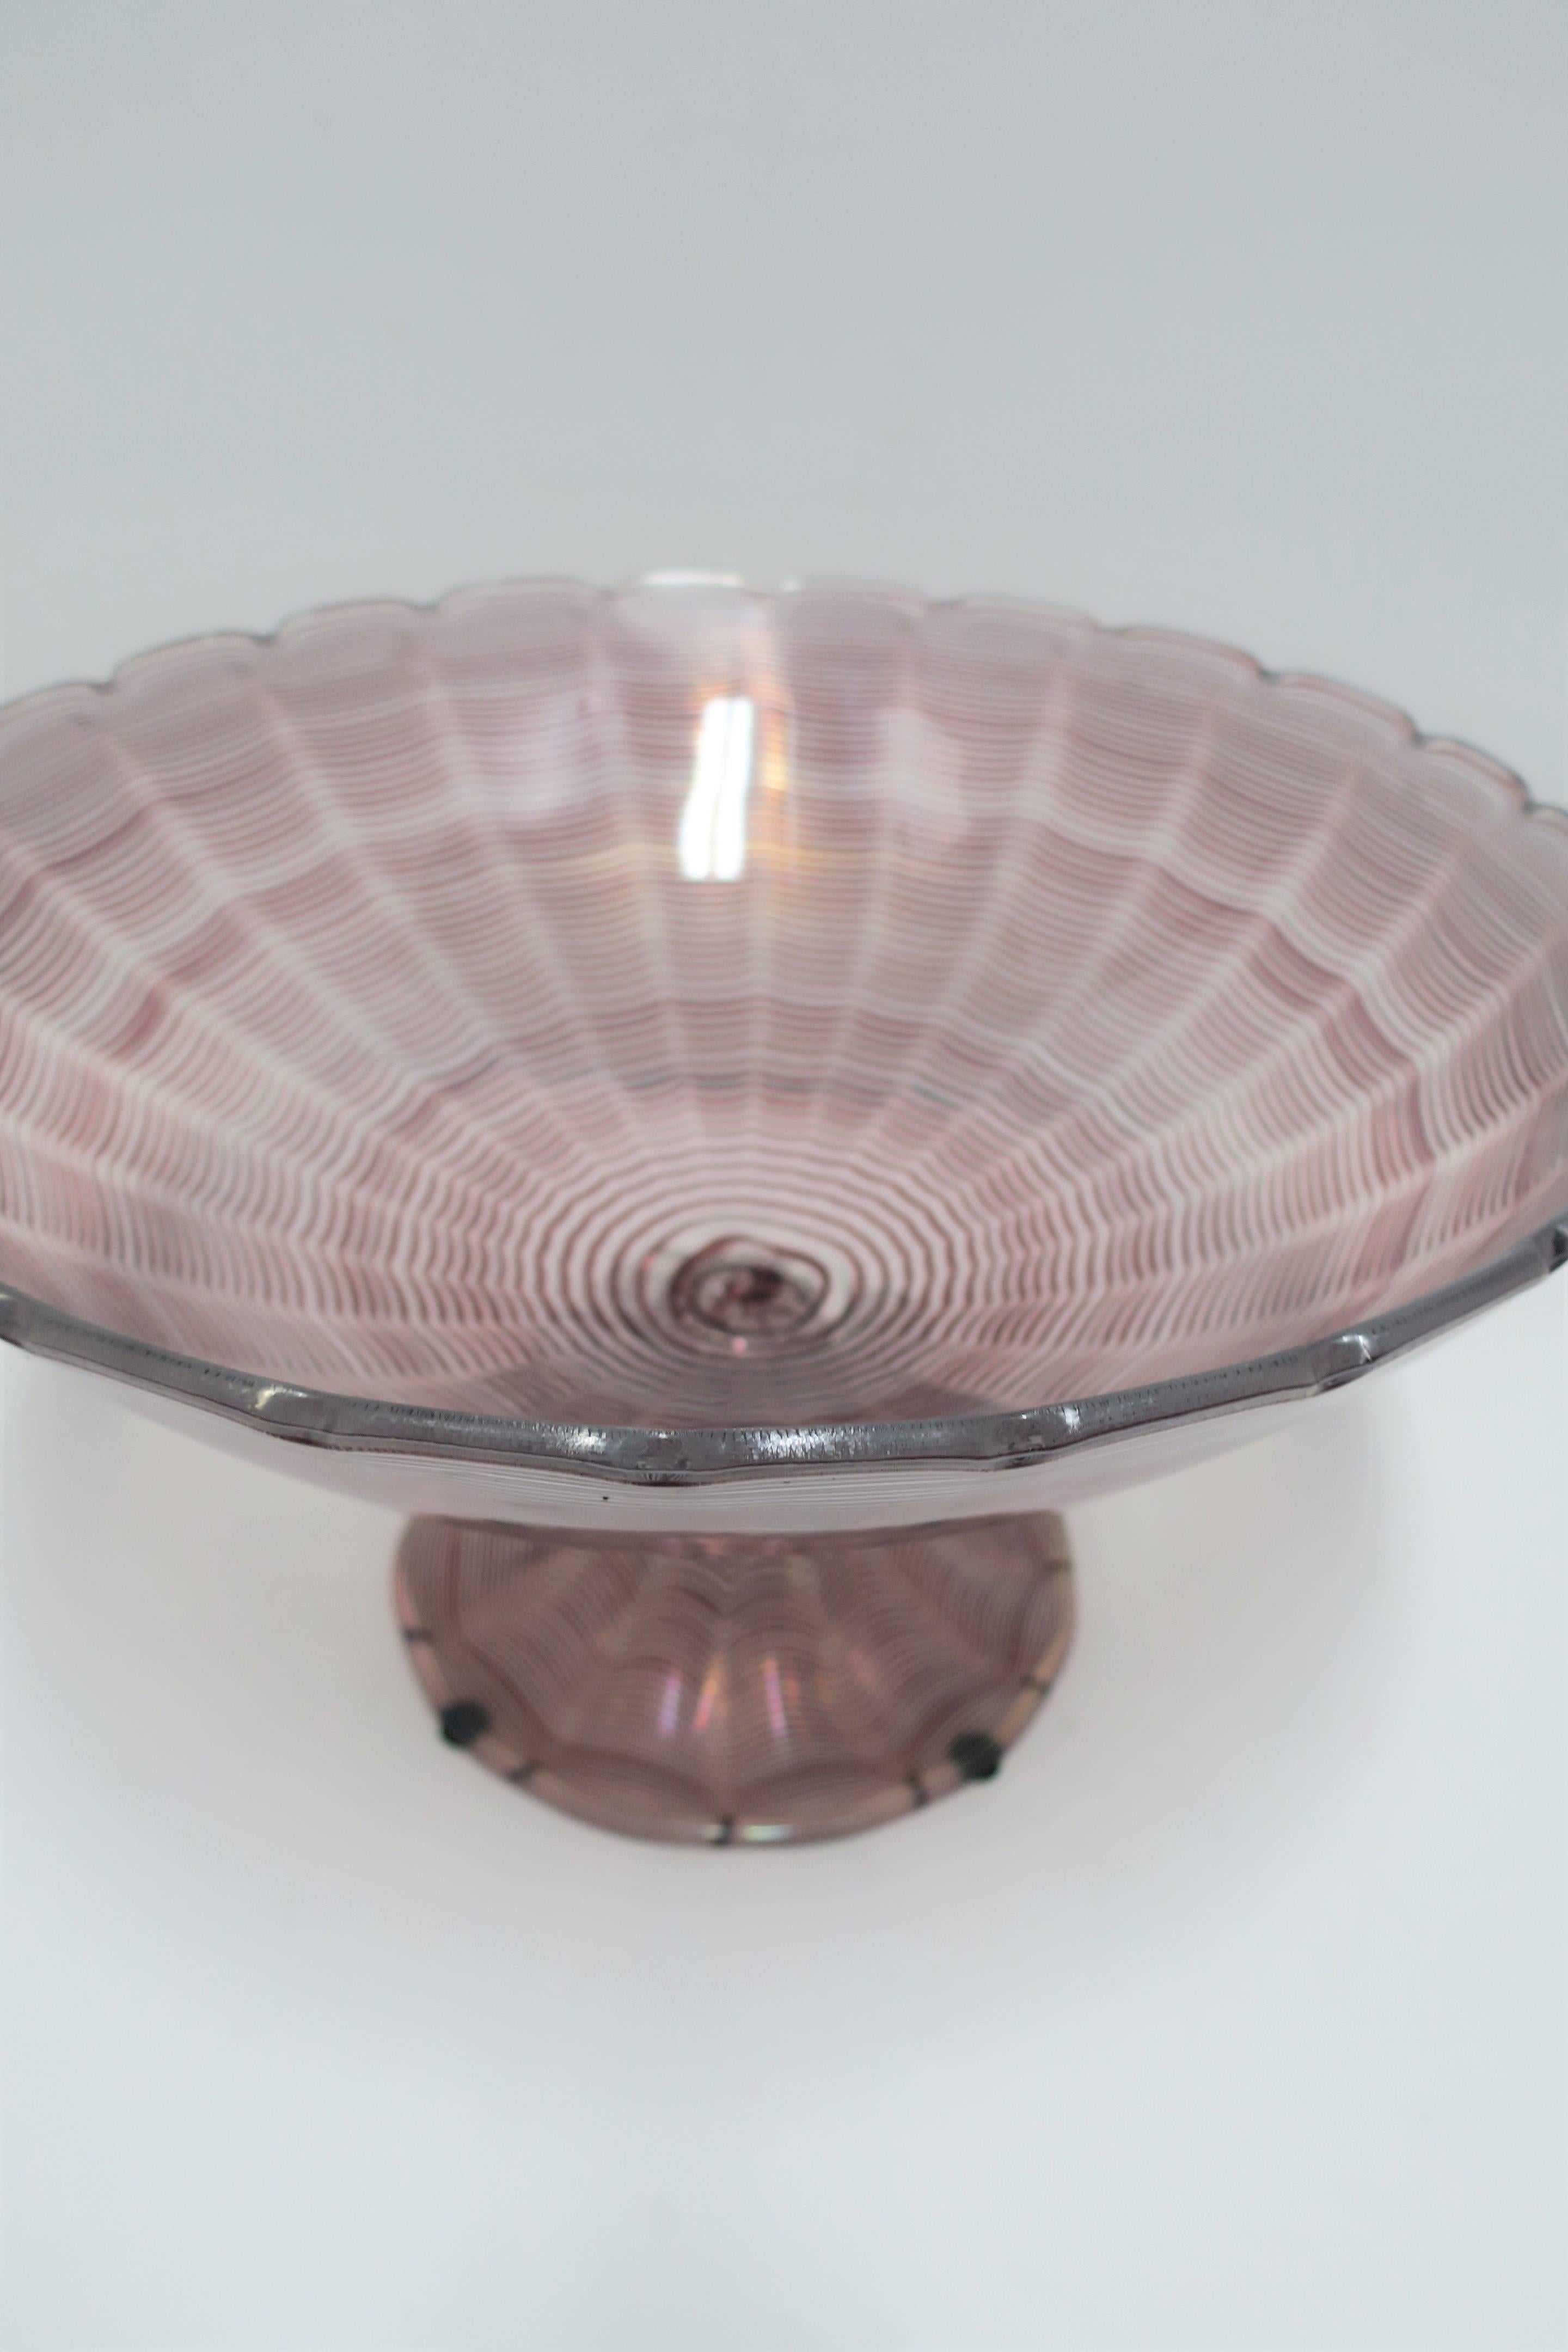 Italian Murano Art Glass Urn Centerpiece Bowl (Handgefertigt)